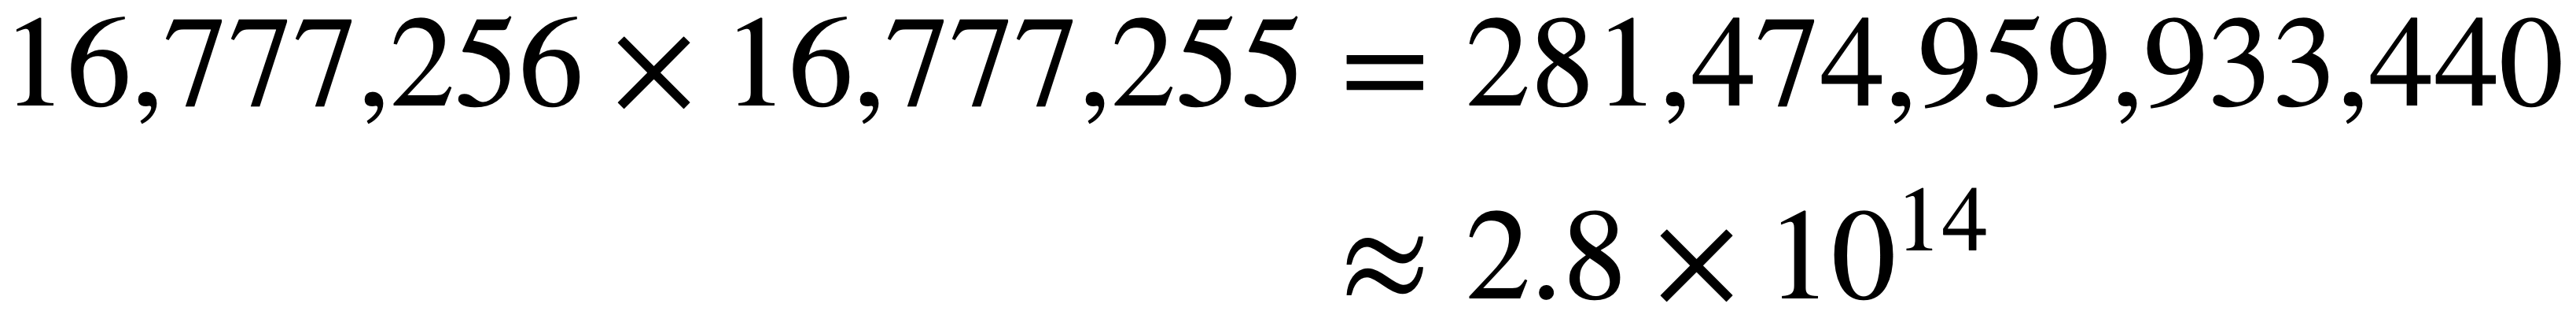 16,777,216 x 16,777,215 = 281,474,959,933,440 = 2.8 x 10^14